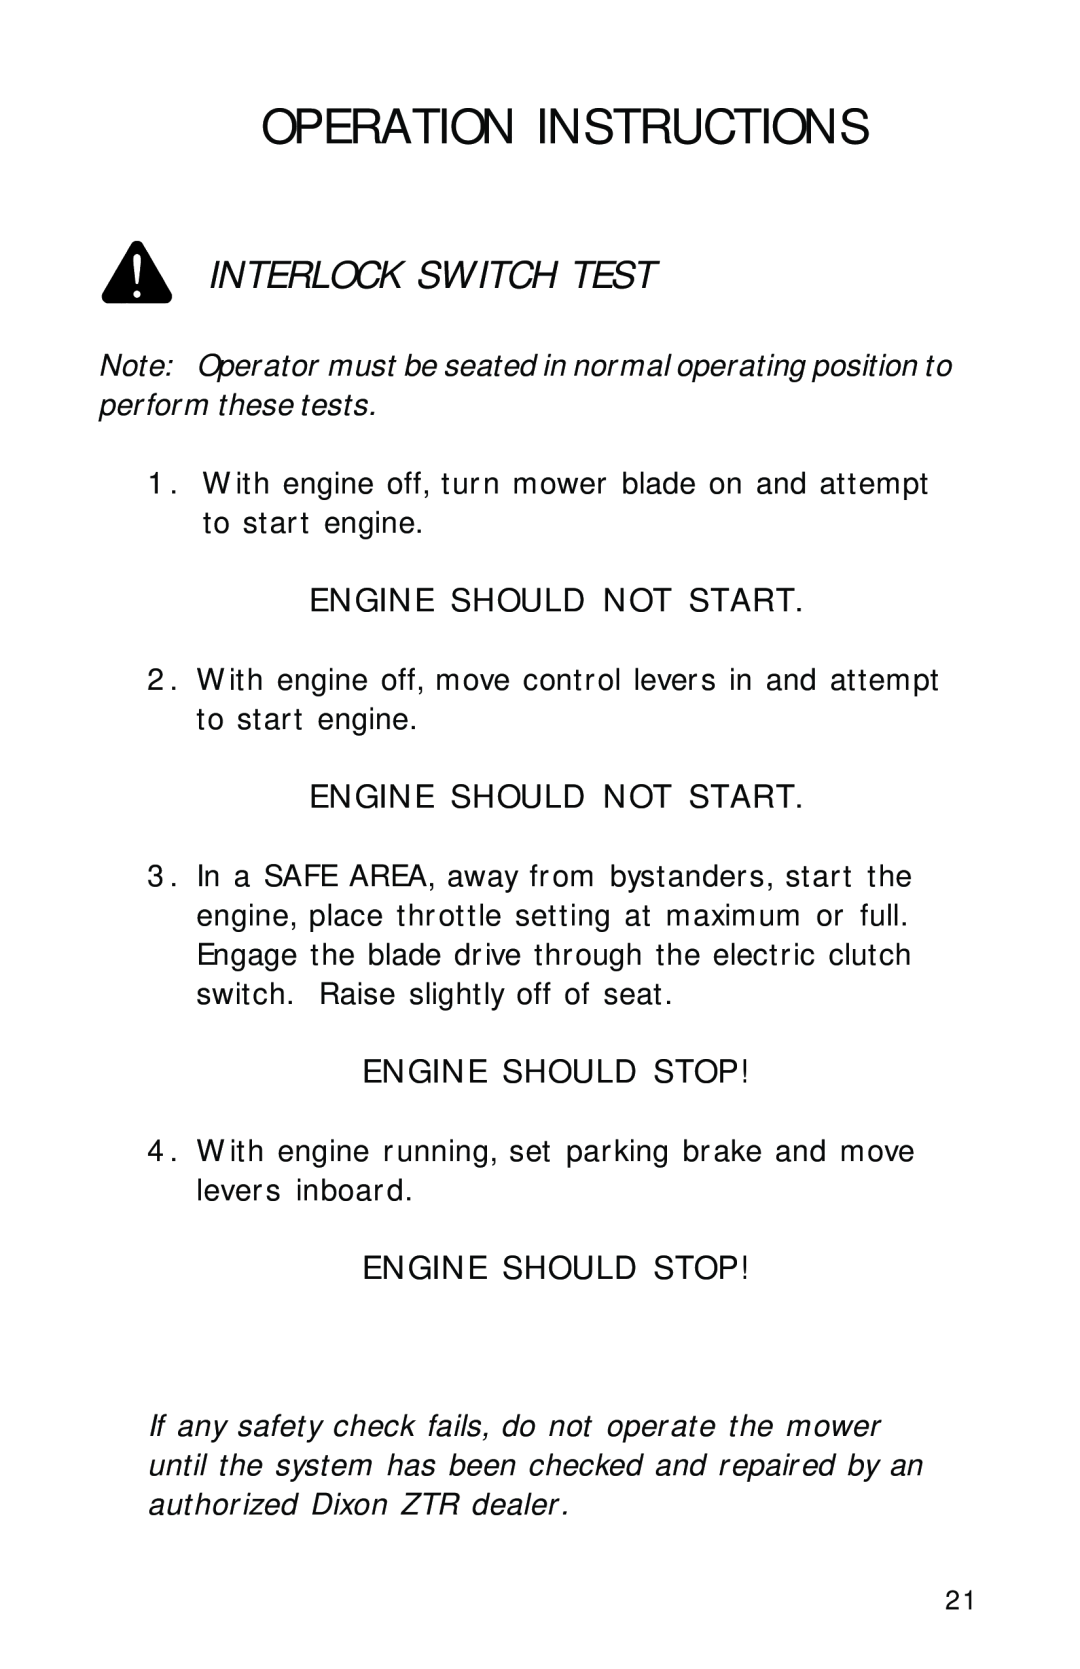 Dixon 2700 manual Interlock Switch Test, Operation Instructions, Engine Should Not Start, Engine Should Stop 